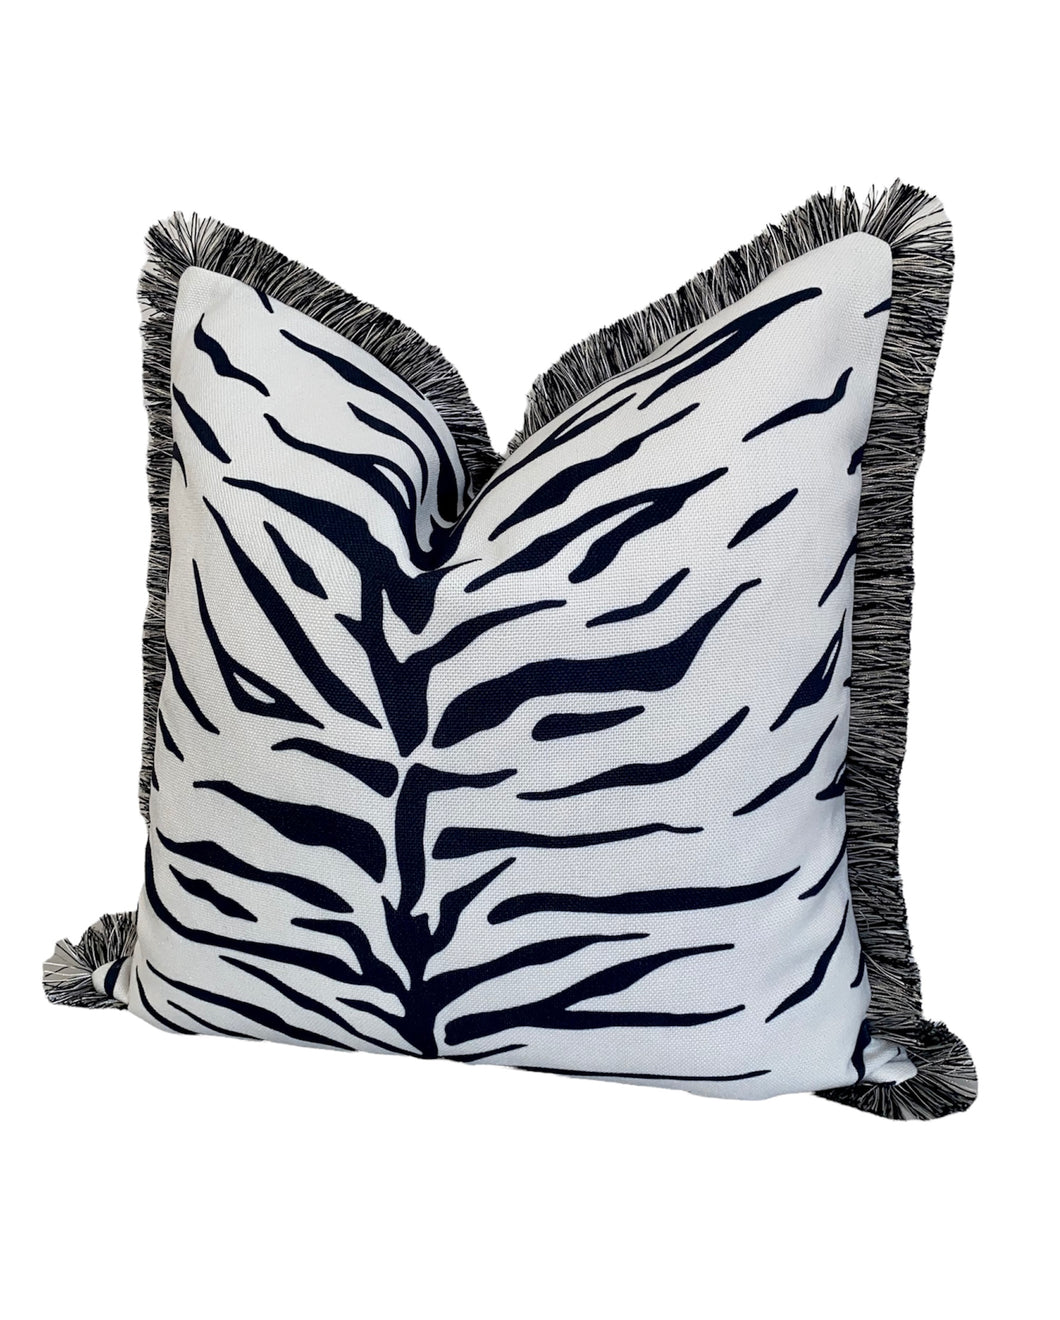 White Tiger Cushion SKU 34679007 | Pillow Animal Print Black & White Monochrome Fringe